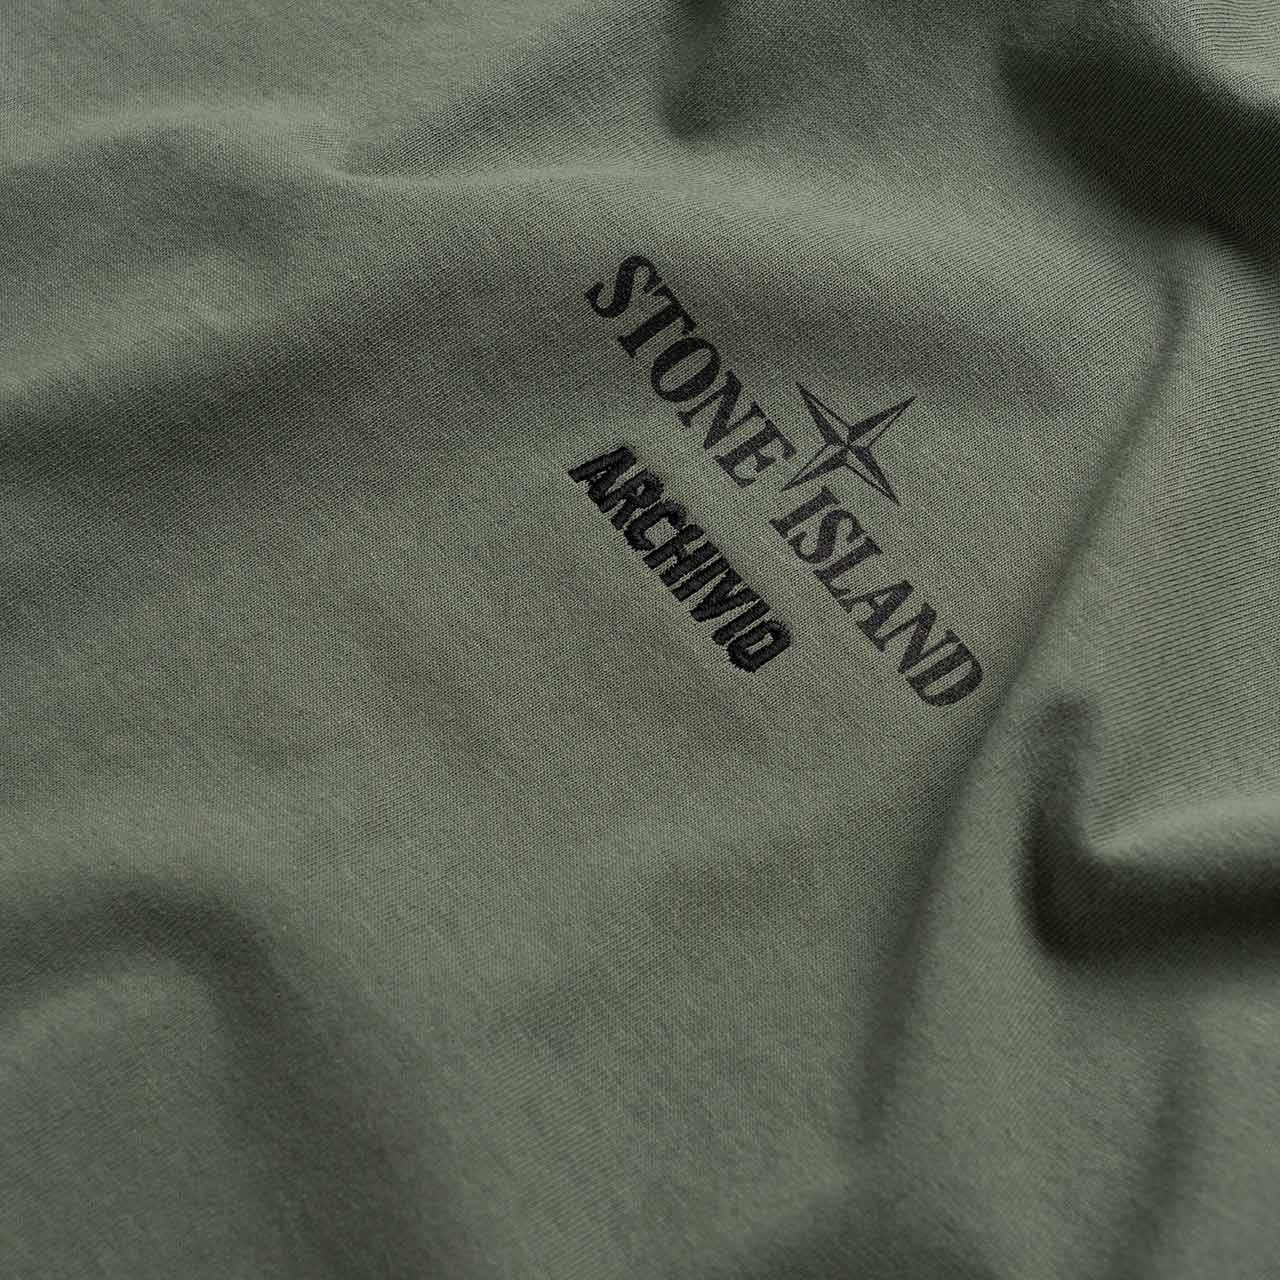 stone island stone island archivio t-shirt (grey green)